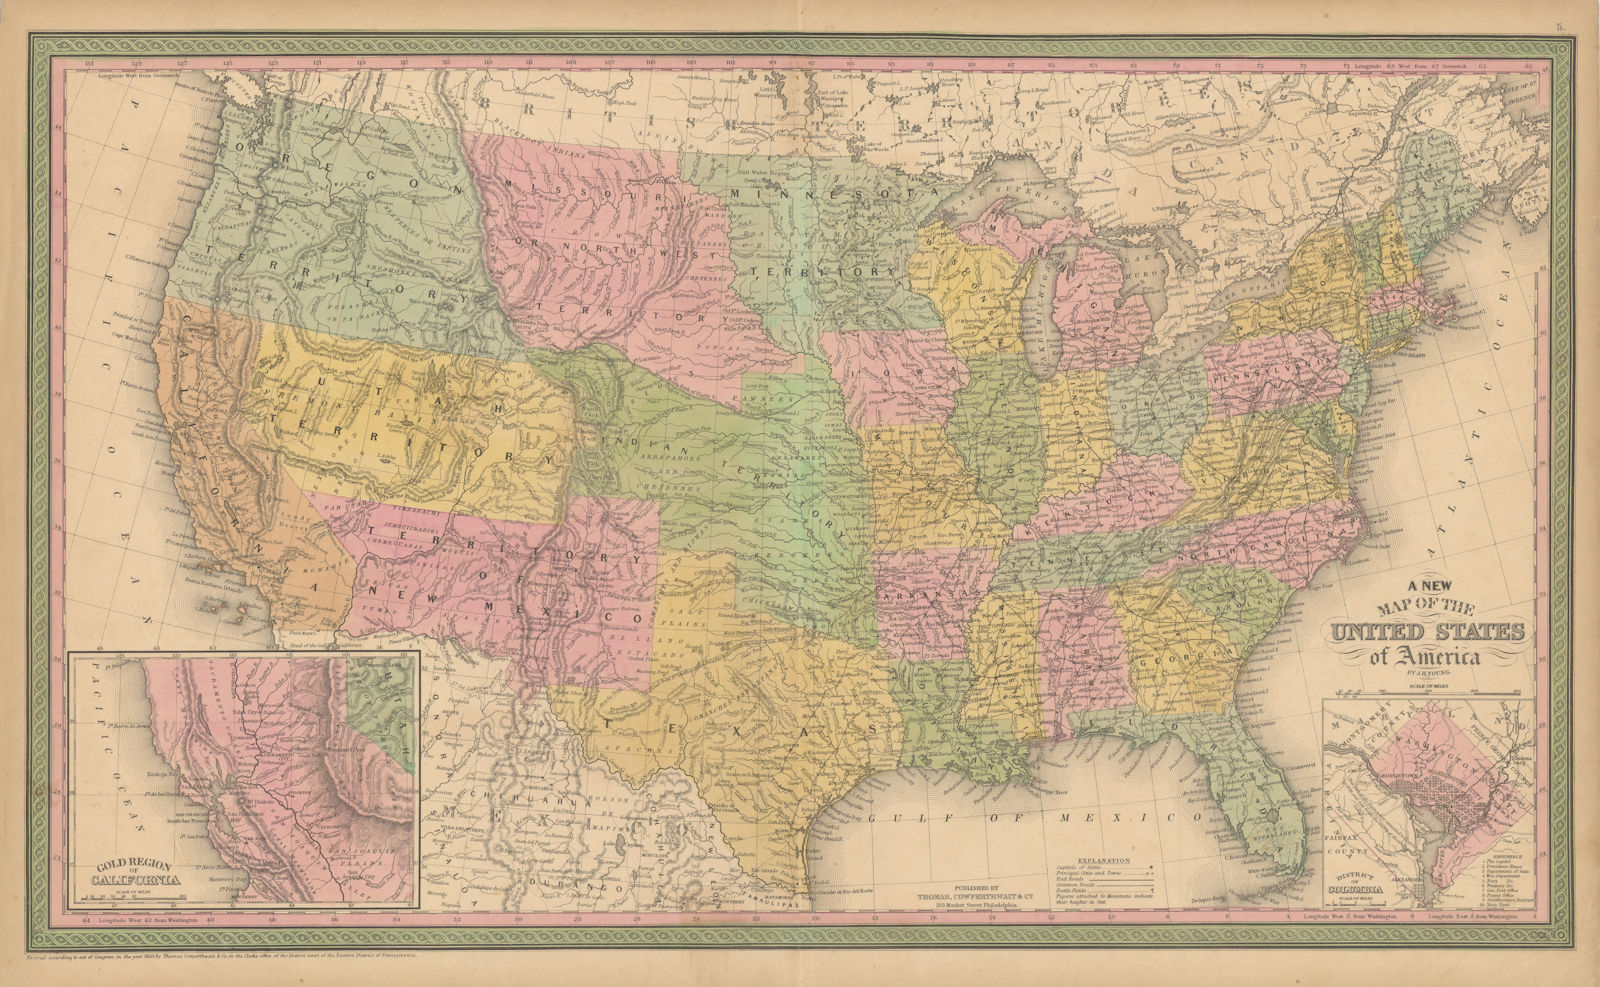 Associate Product United States of America. California Gold region. THOMAS, COWPERTHWAIT 1852 map